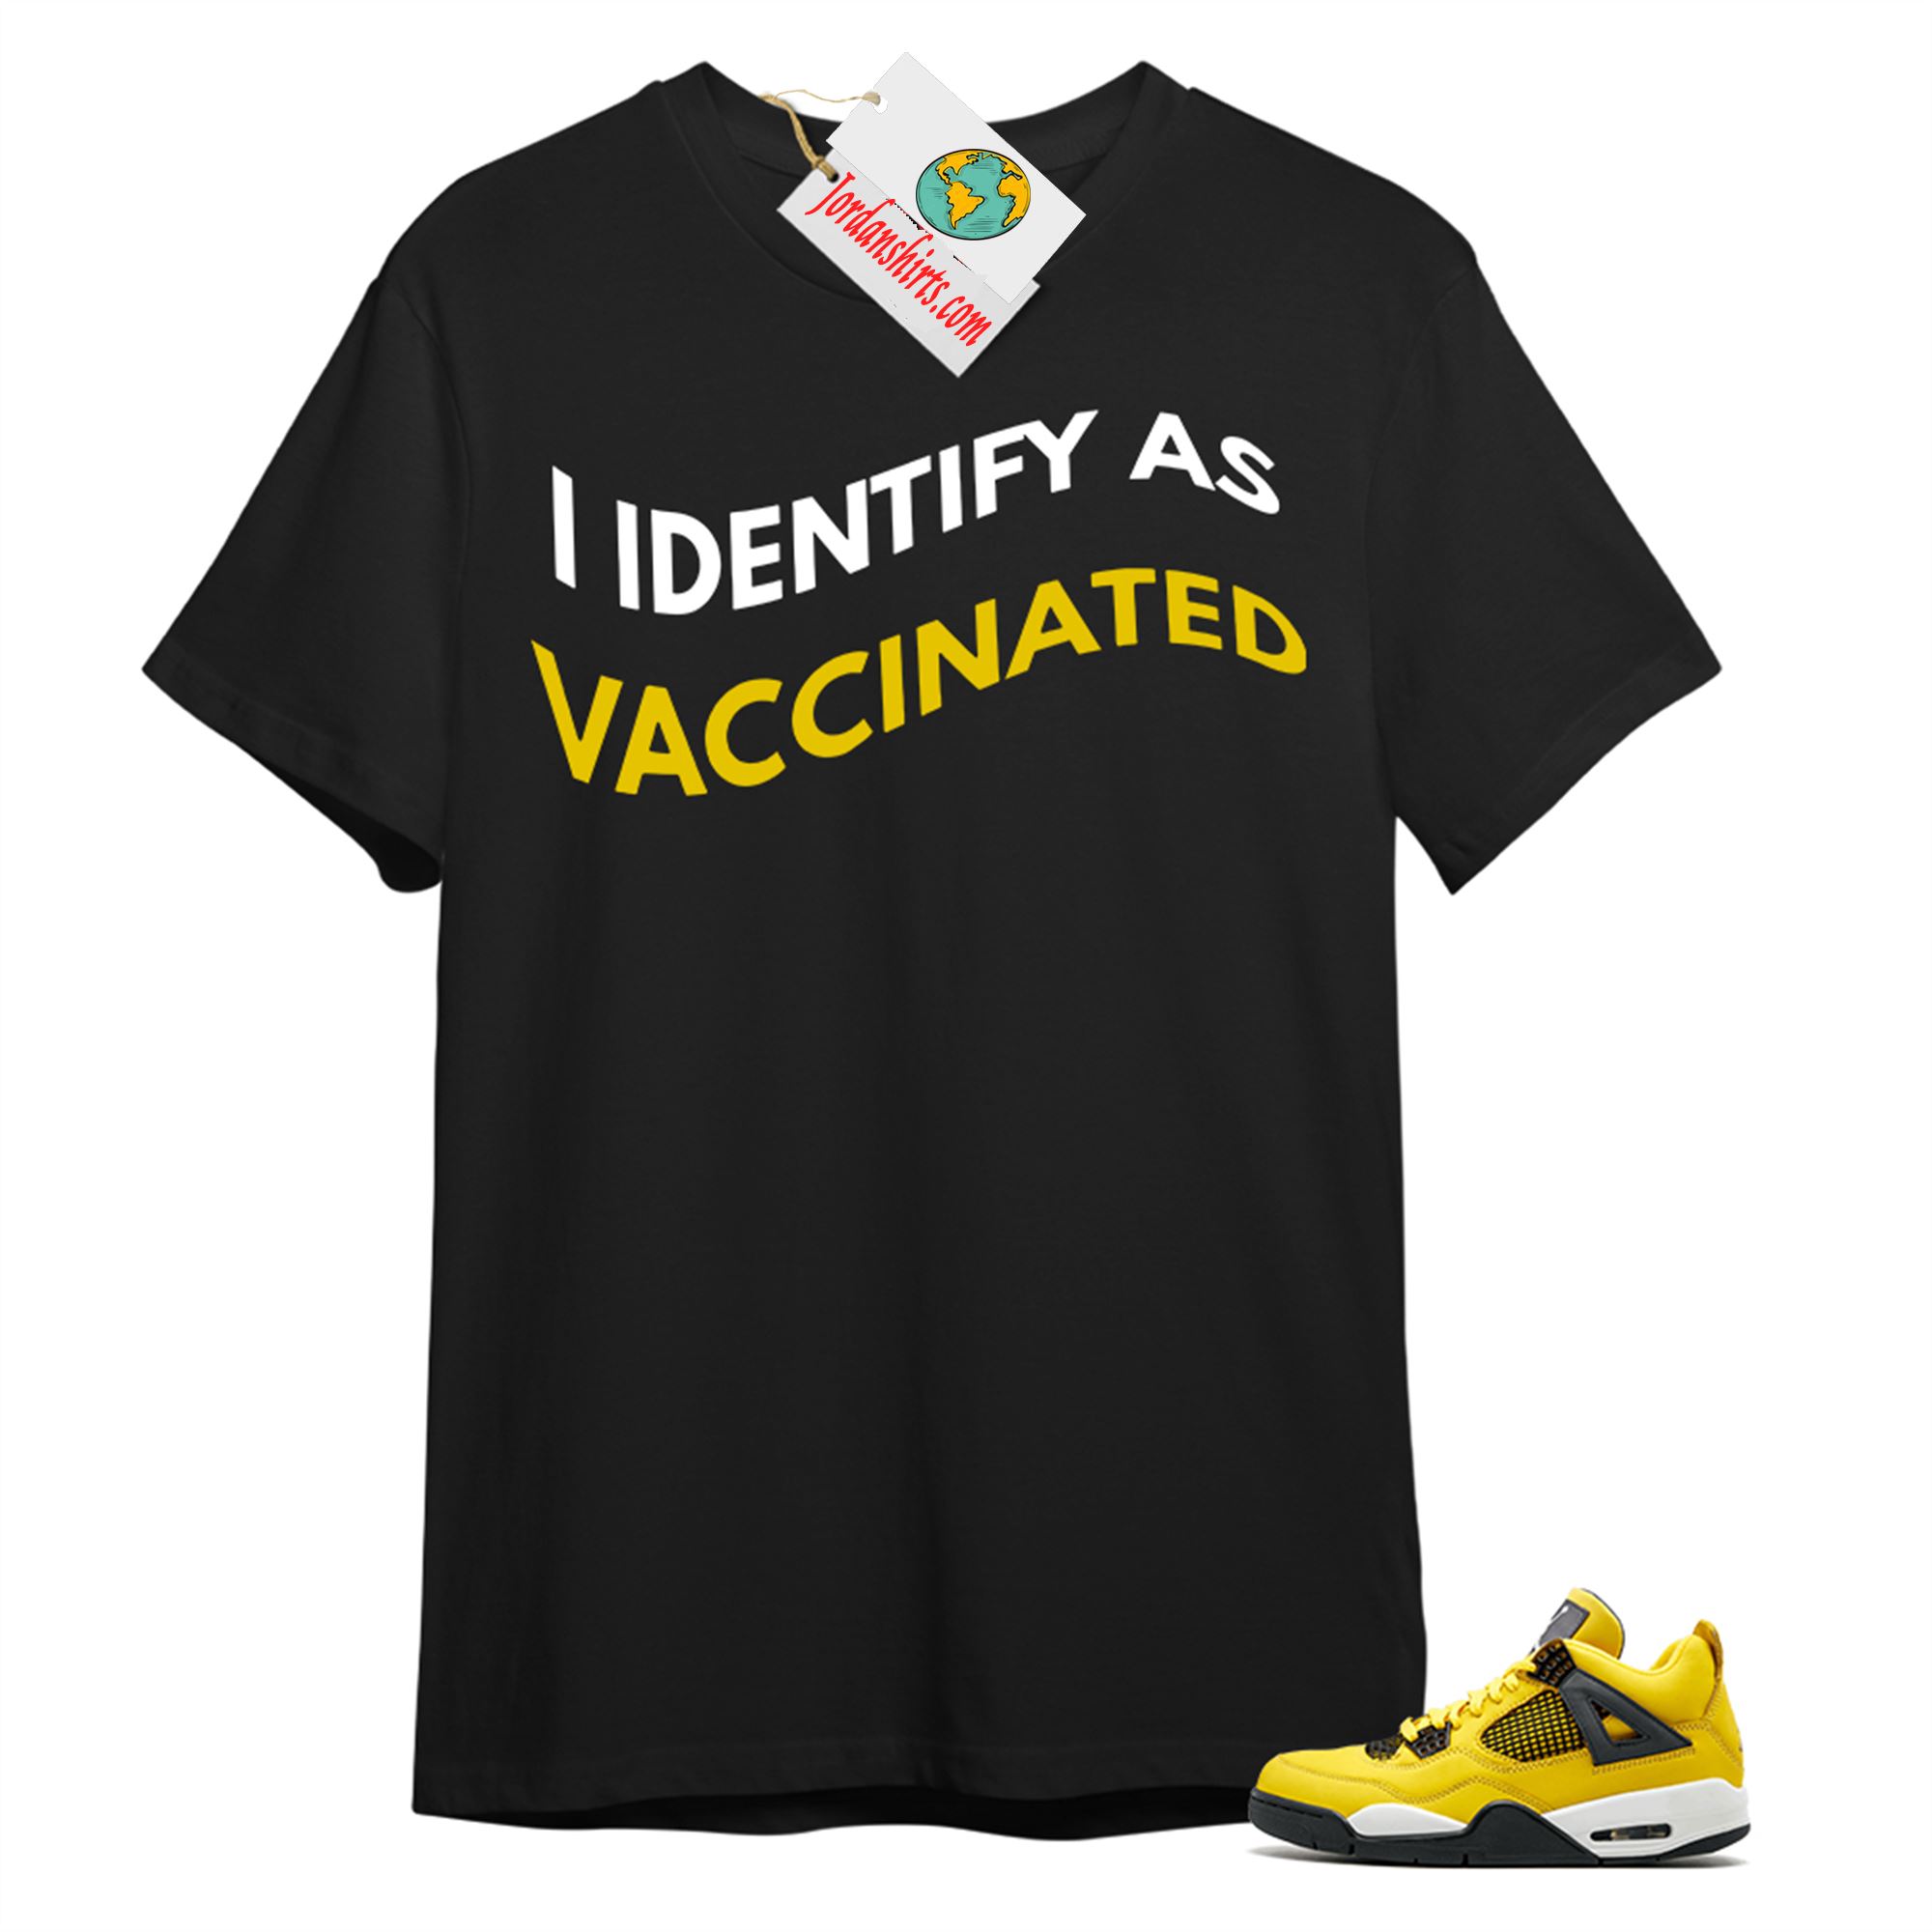 Jordan 4 Shirt, I Identify As Vaccinated Black T-shirt Air Jordan 4 Tour Yellow Lightning 4s Size Up To 5xl